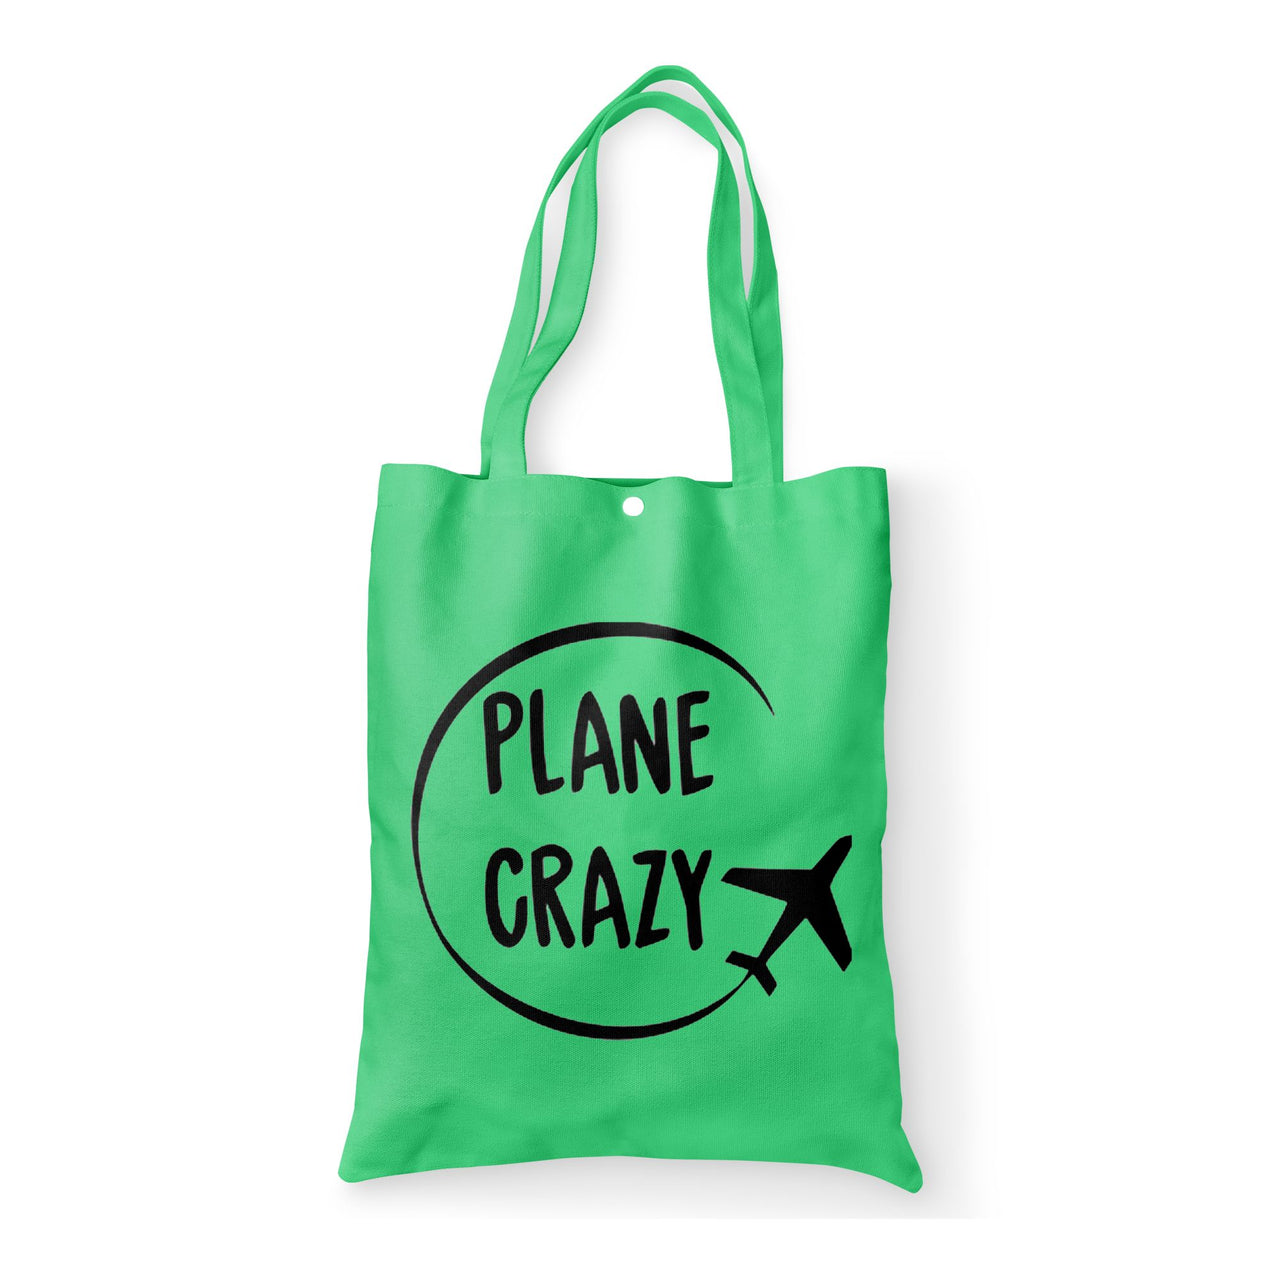 Plane Crazy Designed Tote Bags